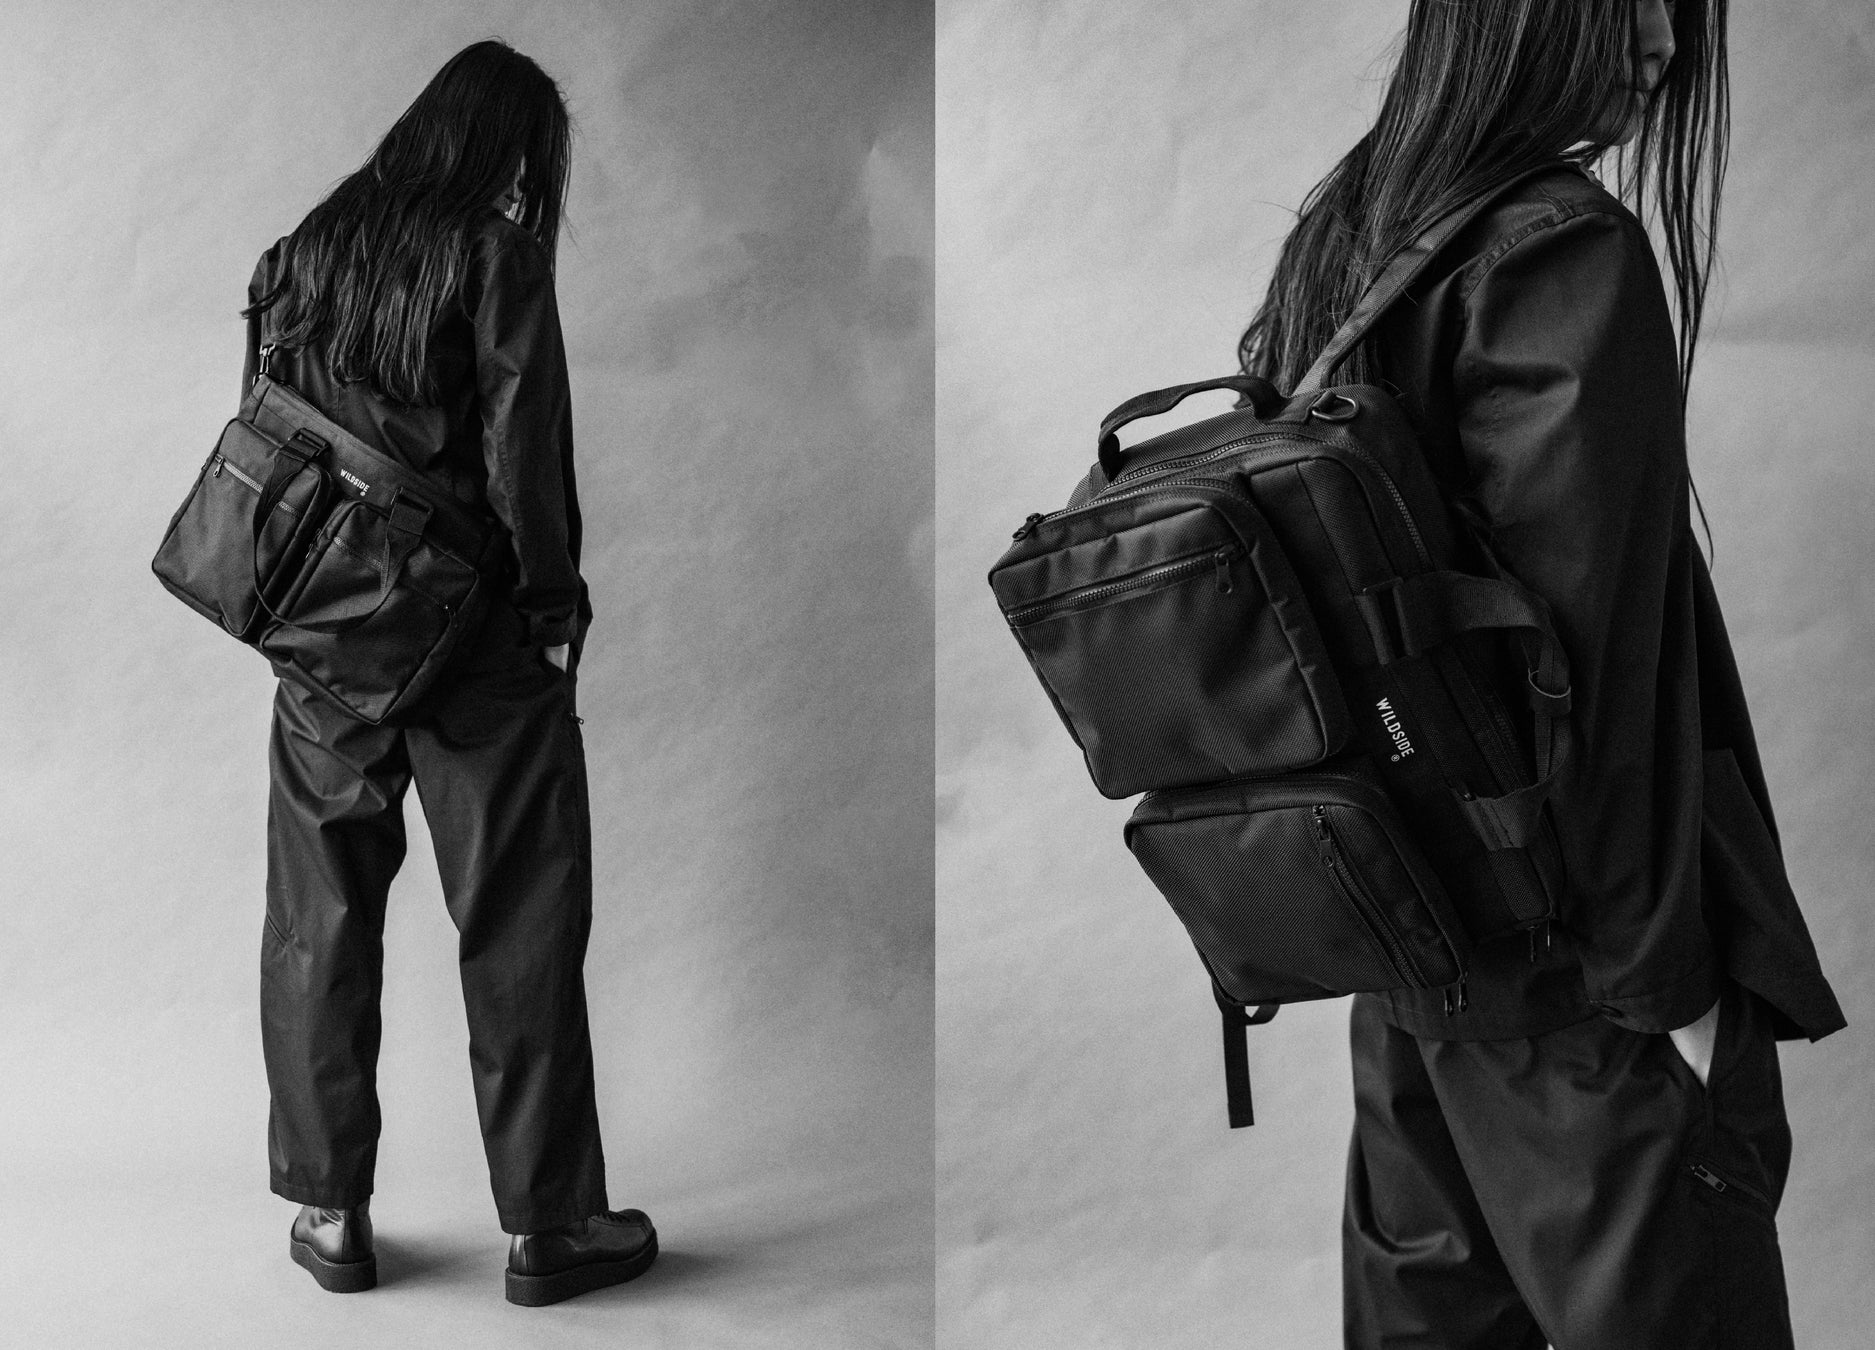 WILDSIDE YOHJI YAMAMOTOオリジナルラインより新作バッグ2型を3月27日(水)に発売